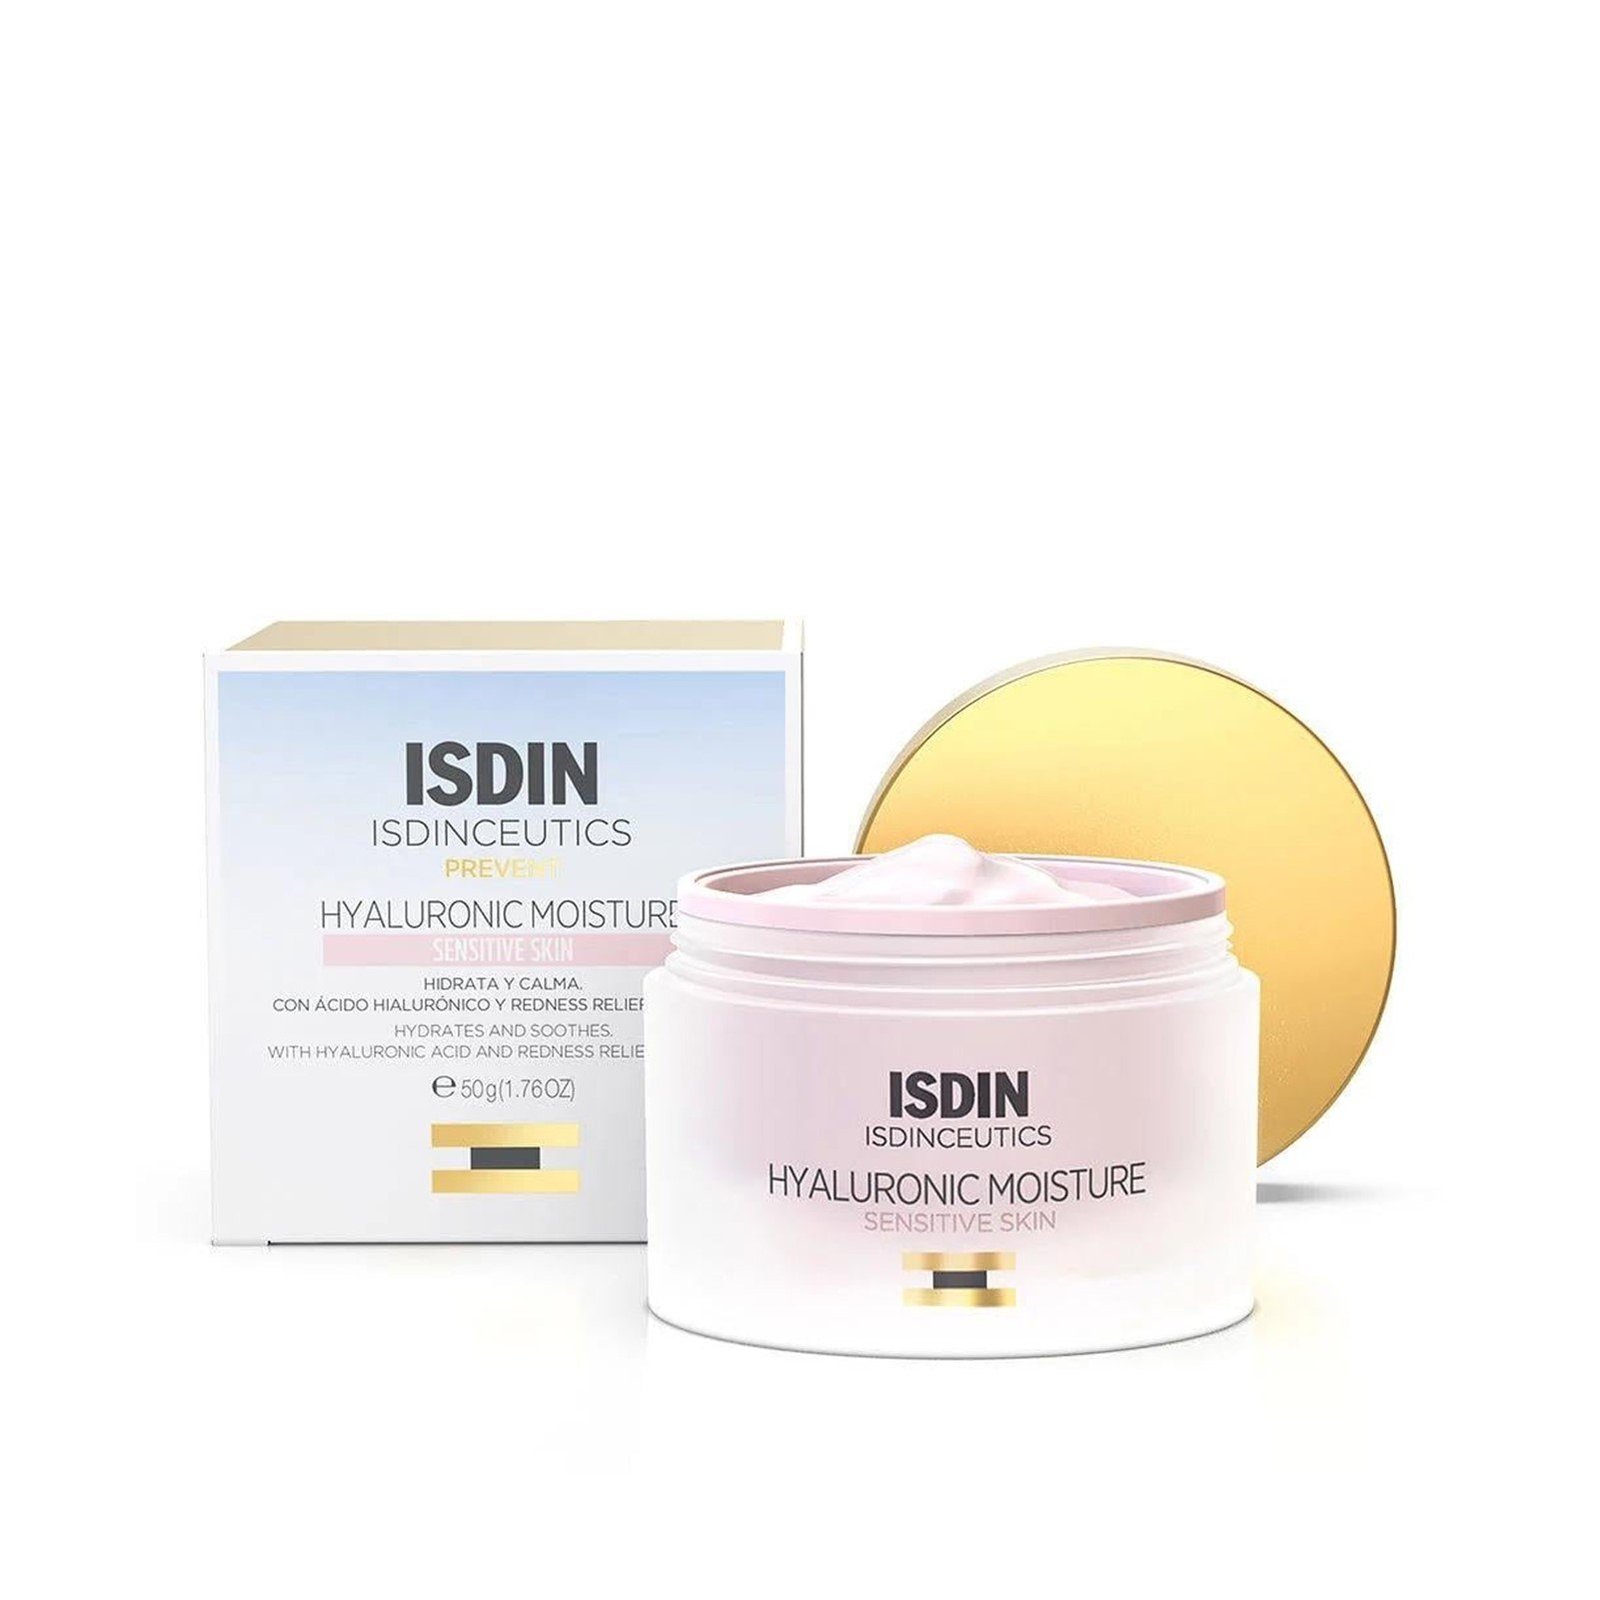 ISDINCEUTICS Hyaluronic Moisture Cream Sensitive Skin 50g